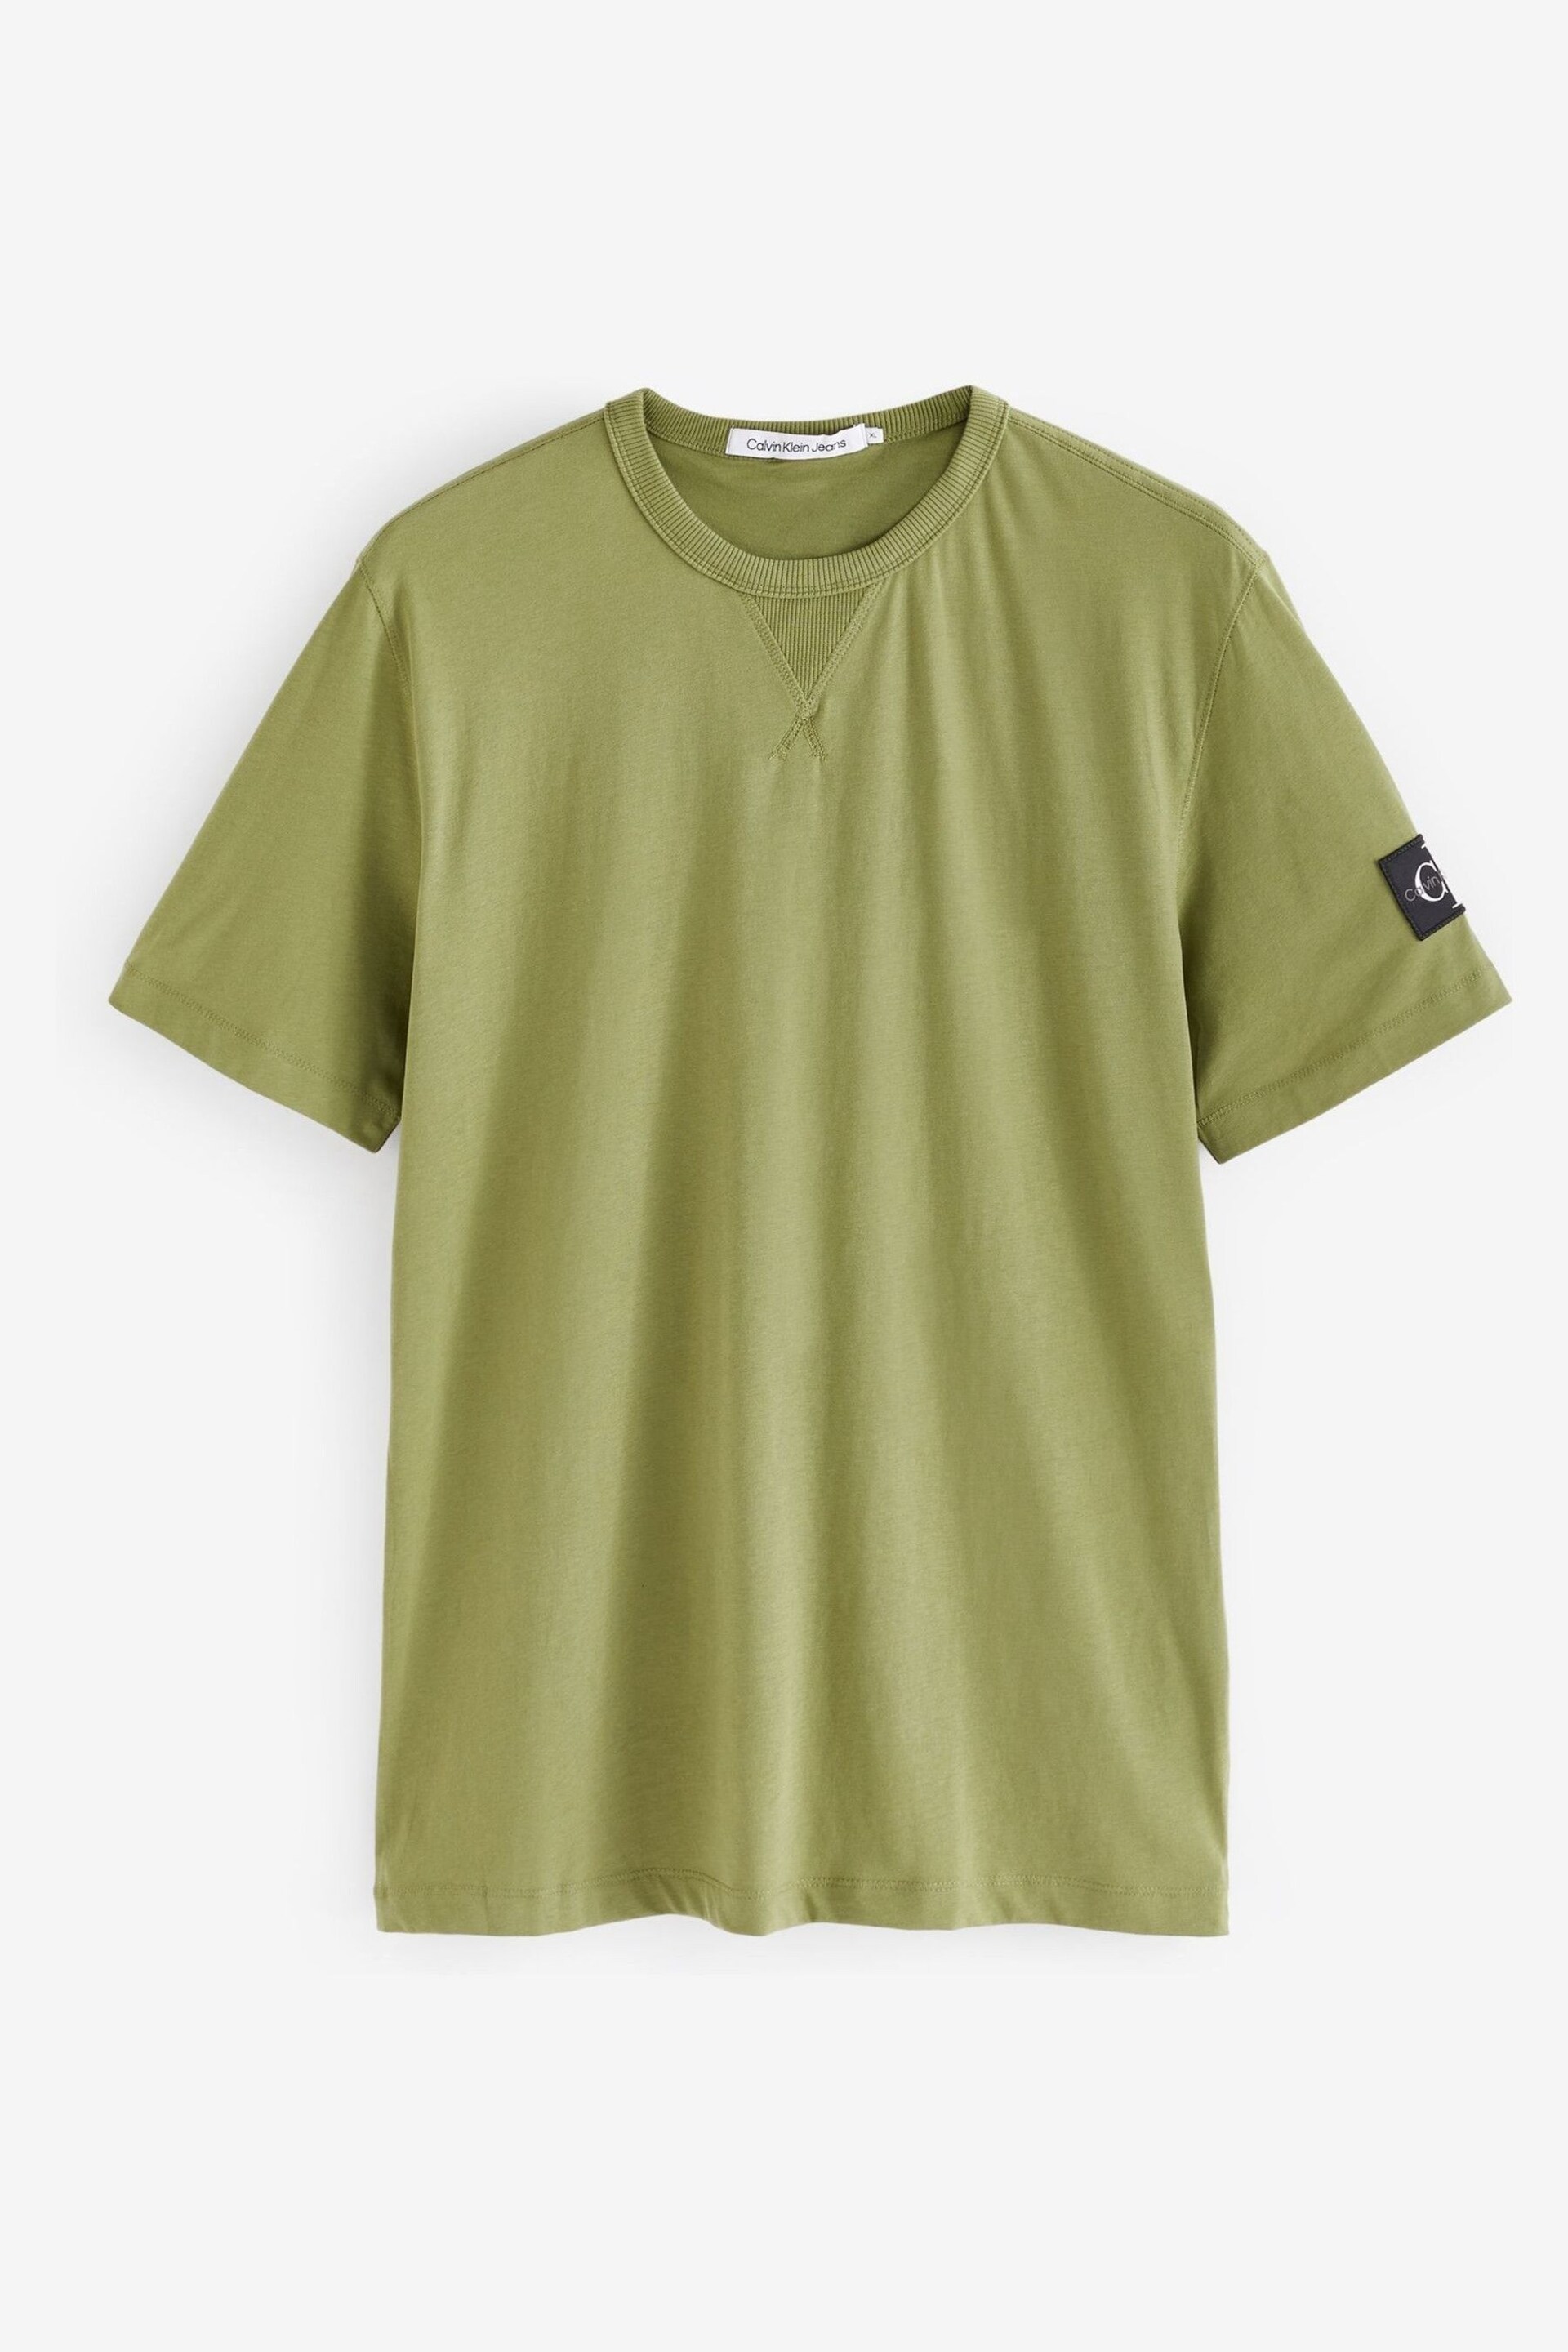 Calvin Klein Green Badge Crew Neck T-Shirt - Image 1 of 5